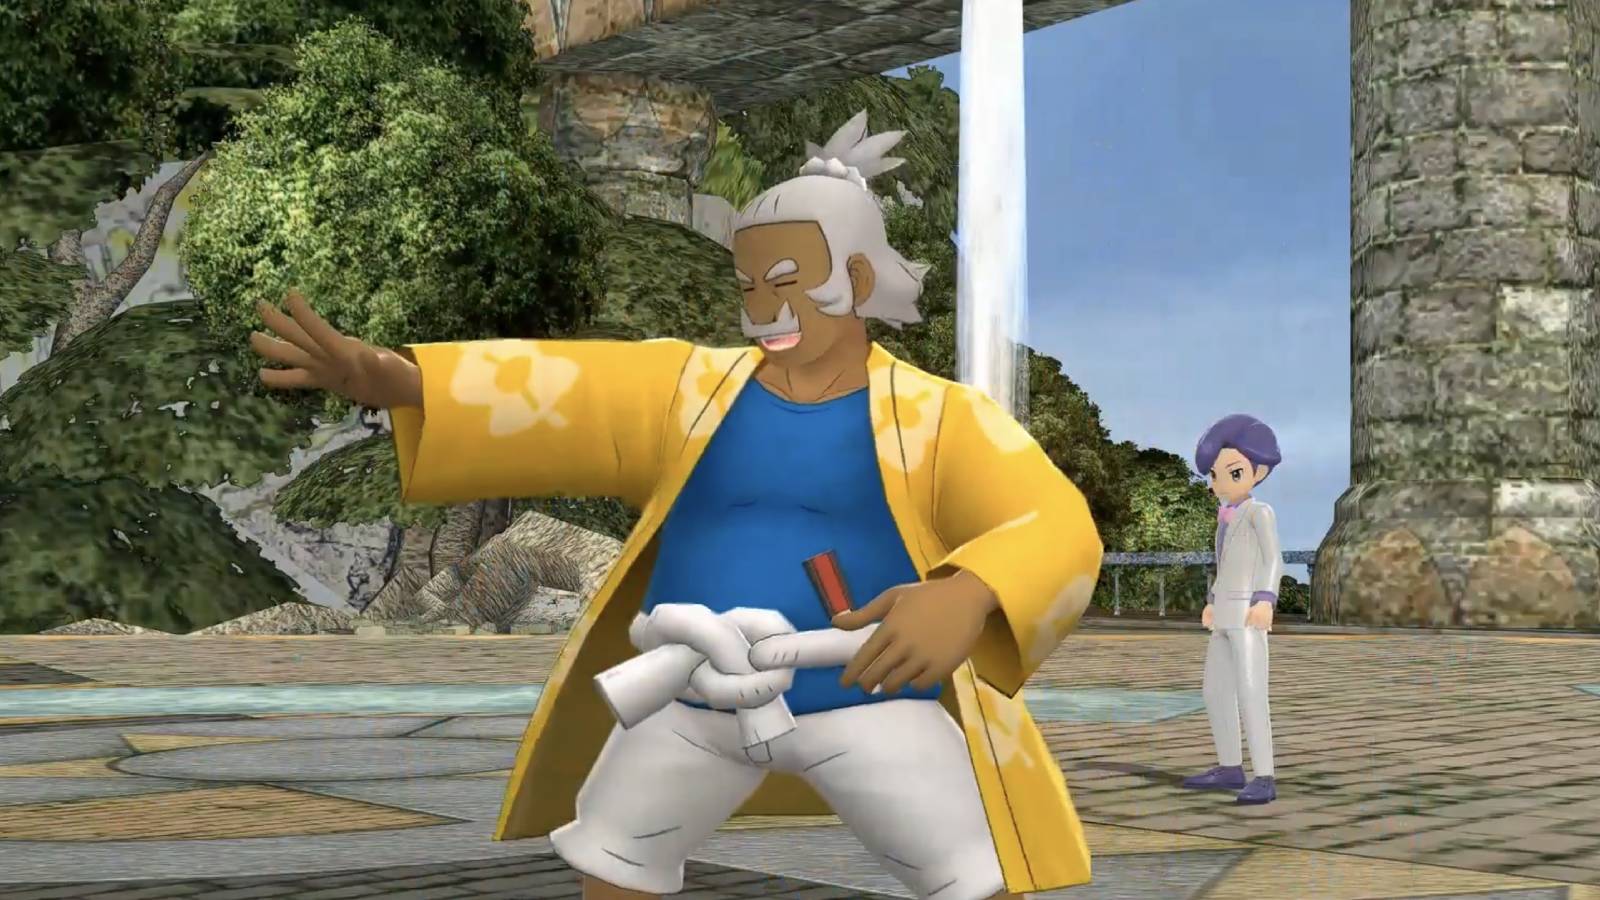 A custom screenshot shows the character Hala appearing as a Pokemon